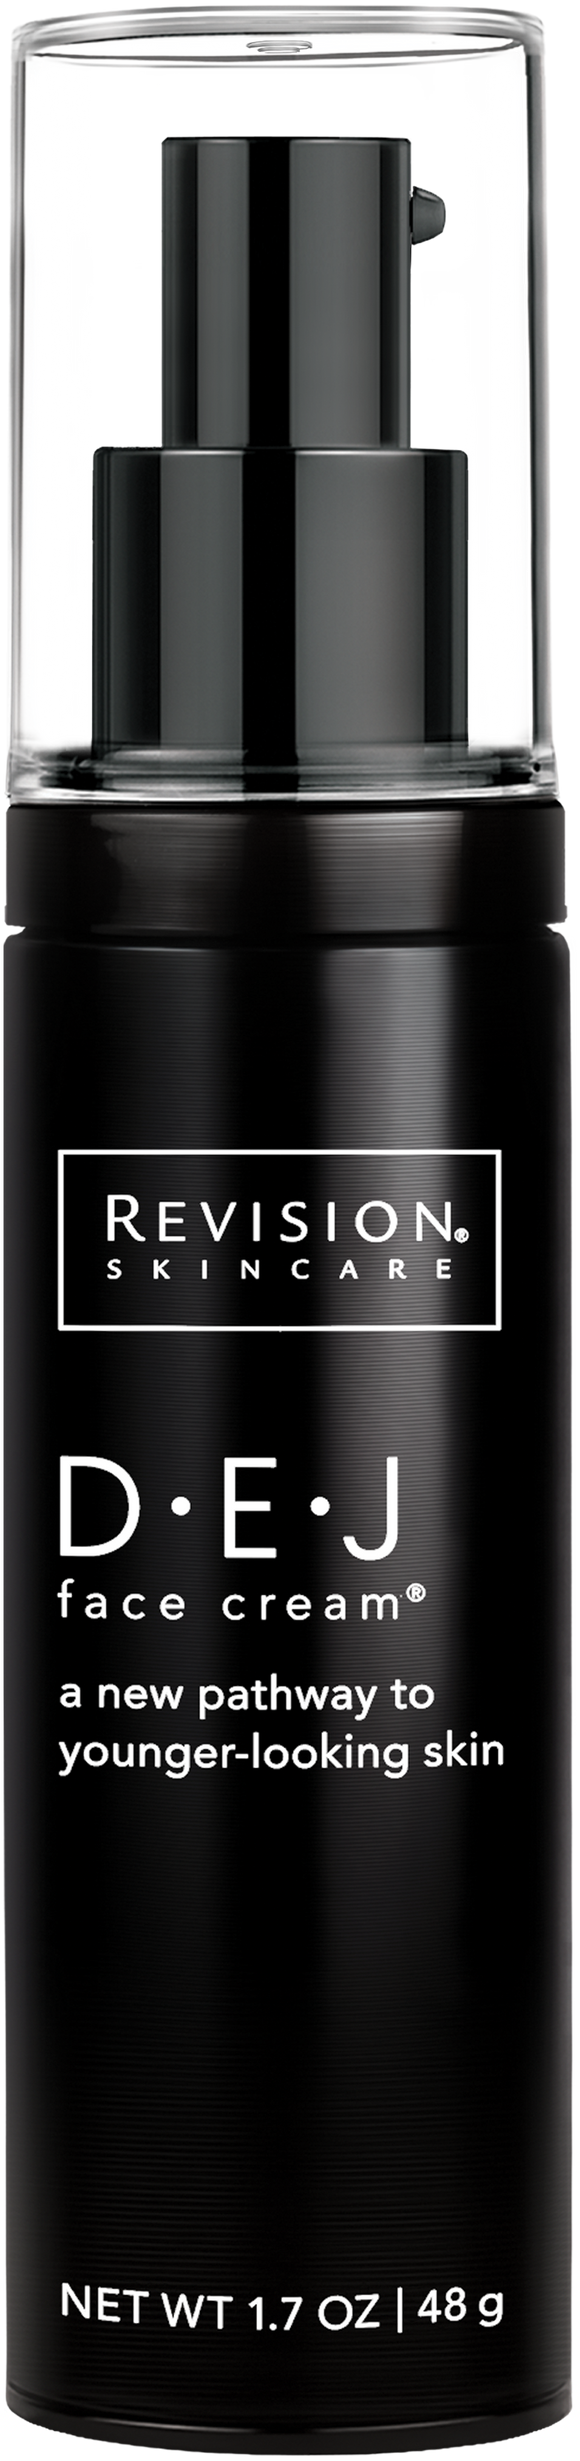 Revision Skincare D·E·J Face Cream